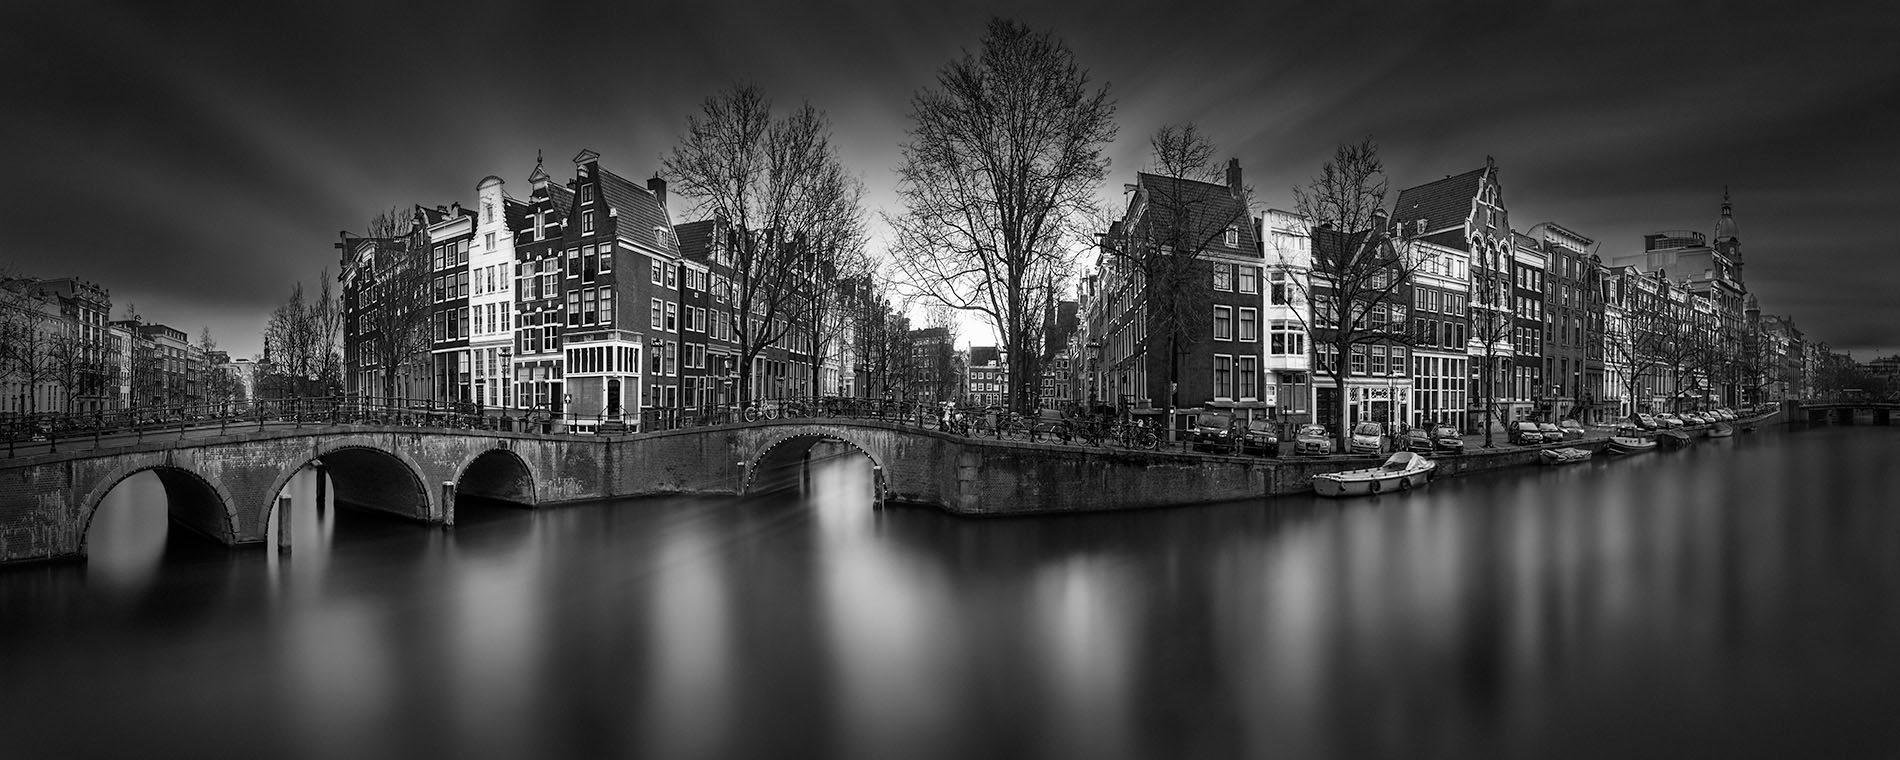 A Tale of the Past I - Keizersgracht Canal Amsterdam - © Julia Anna Gospodarou 2017